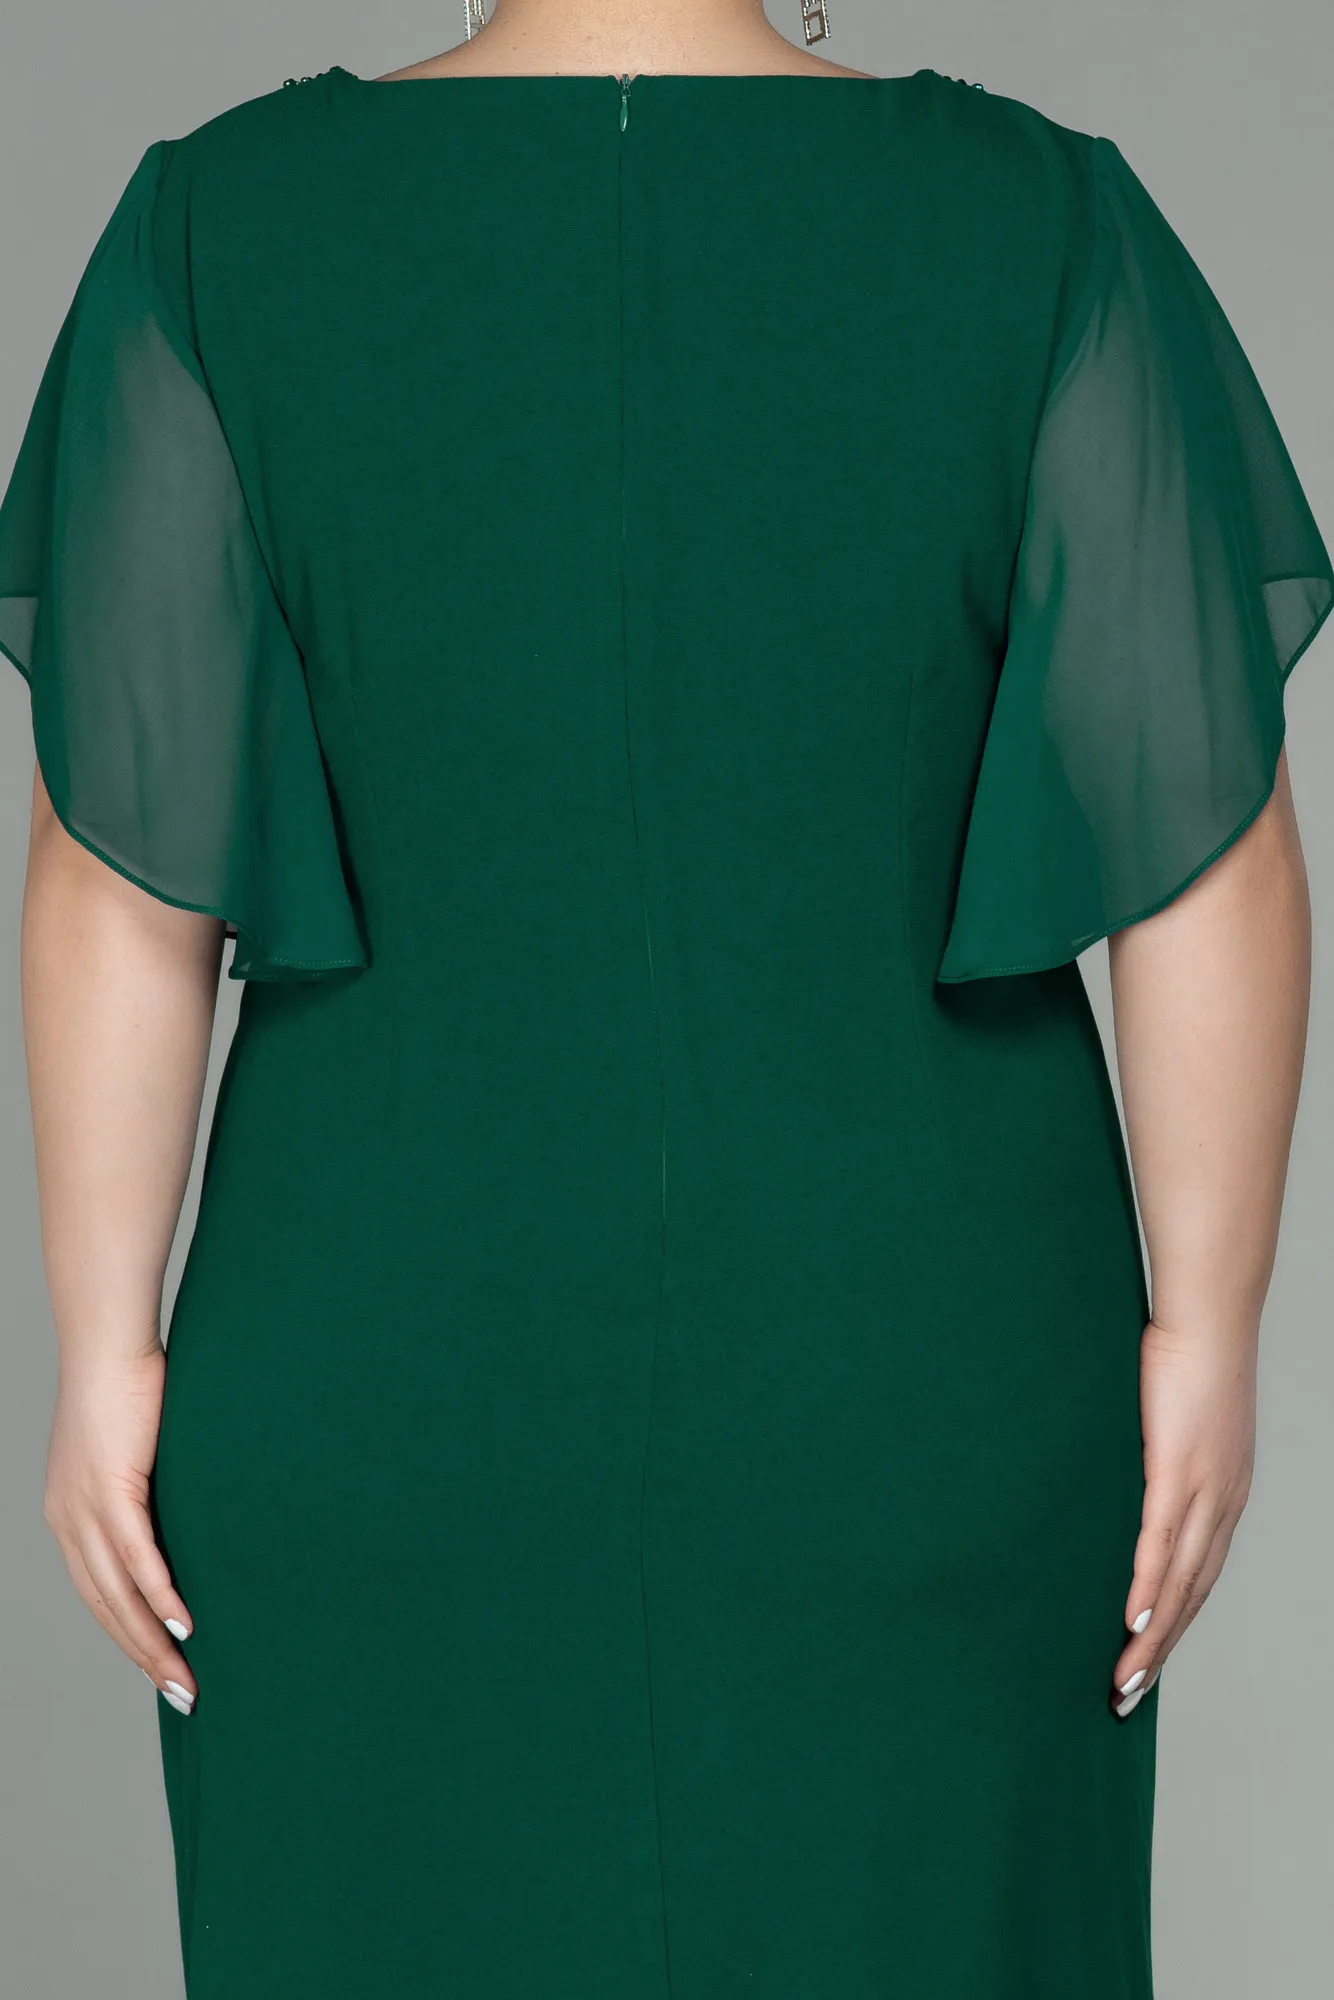 Emerald Green-Midi Plus Size Evening Dress ABK1626